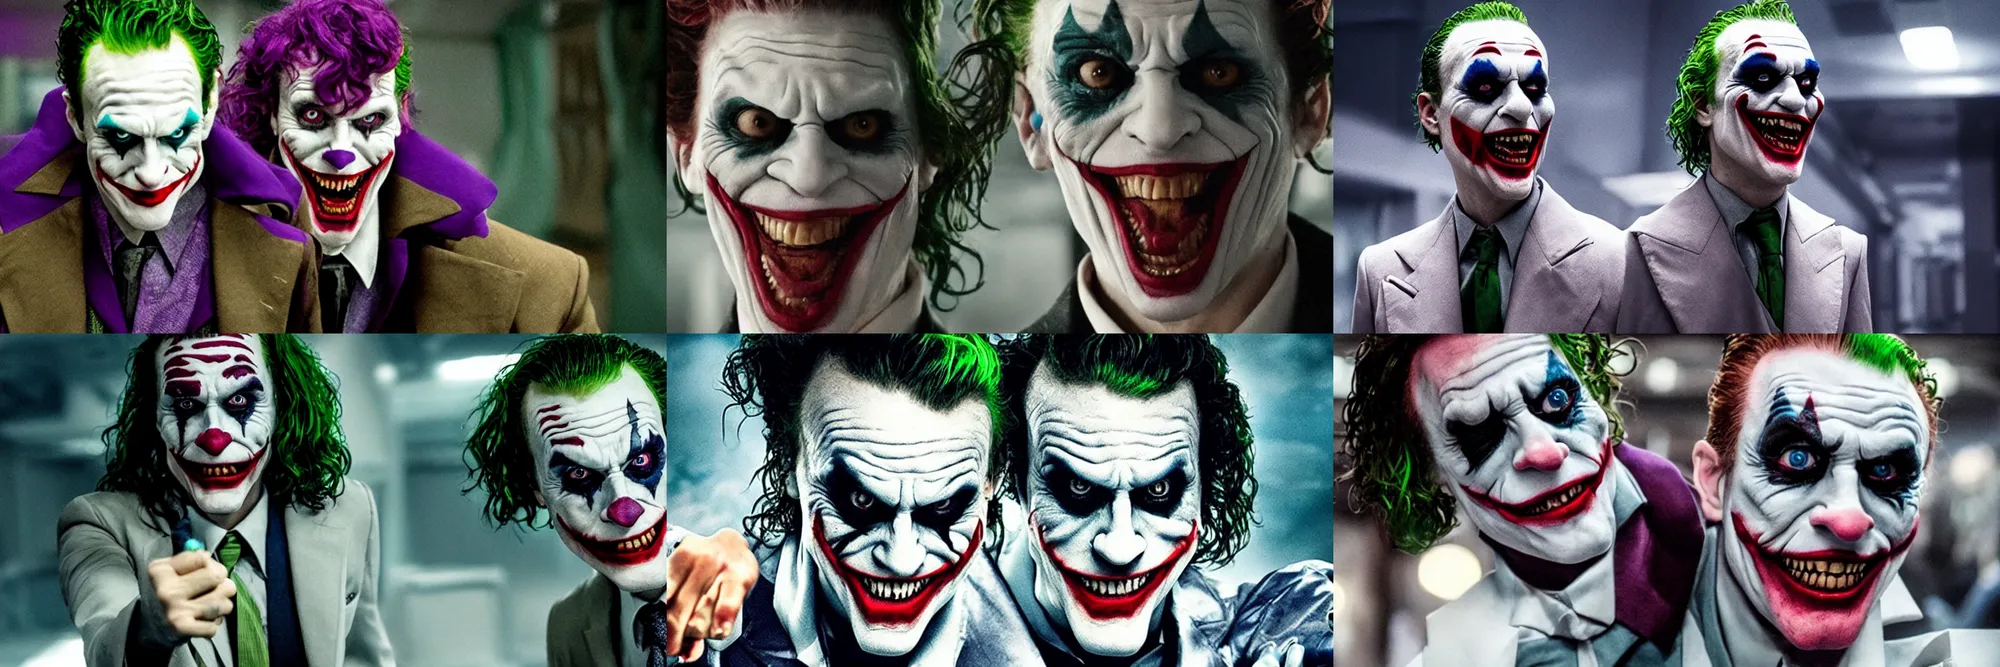 Prompt: Futuristic Joker movie, film still